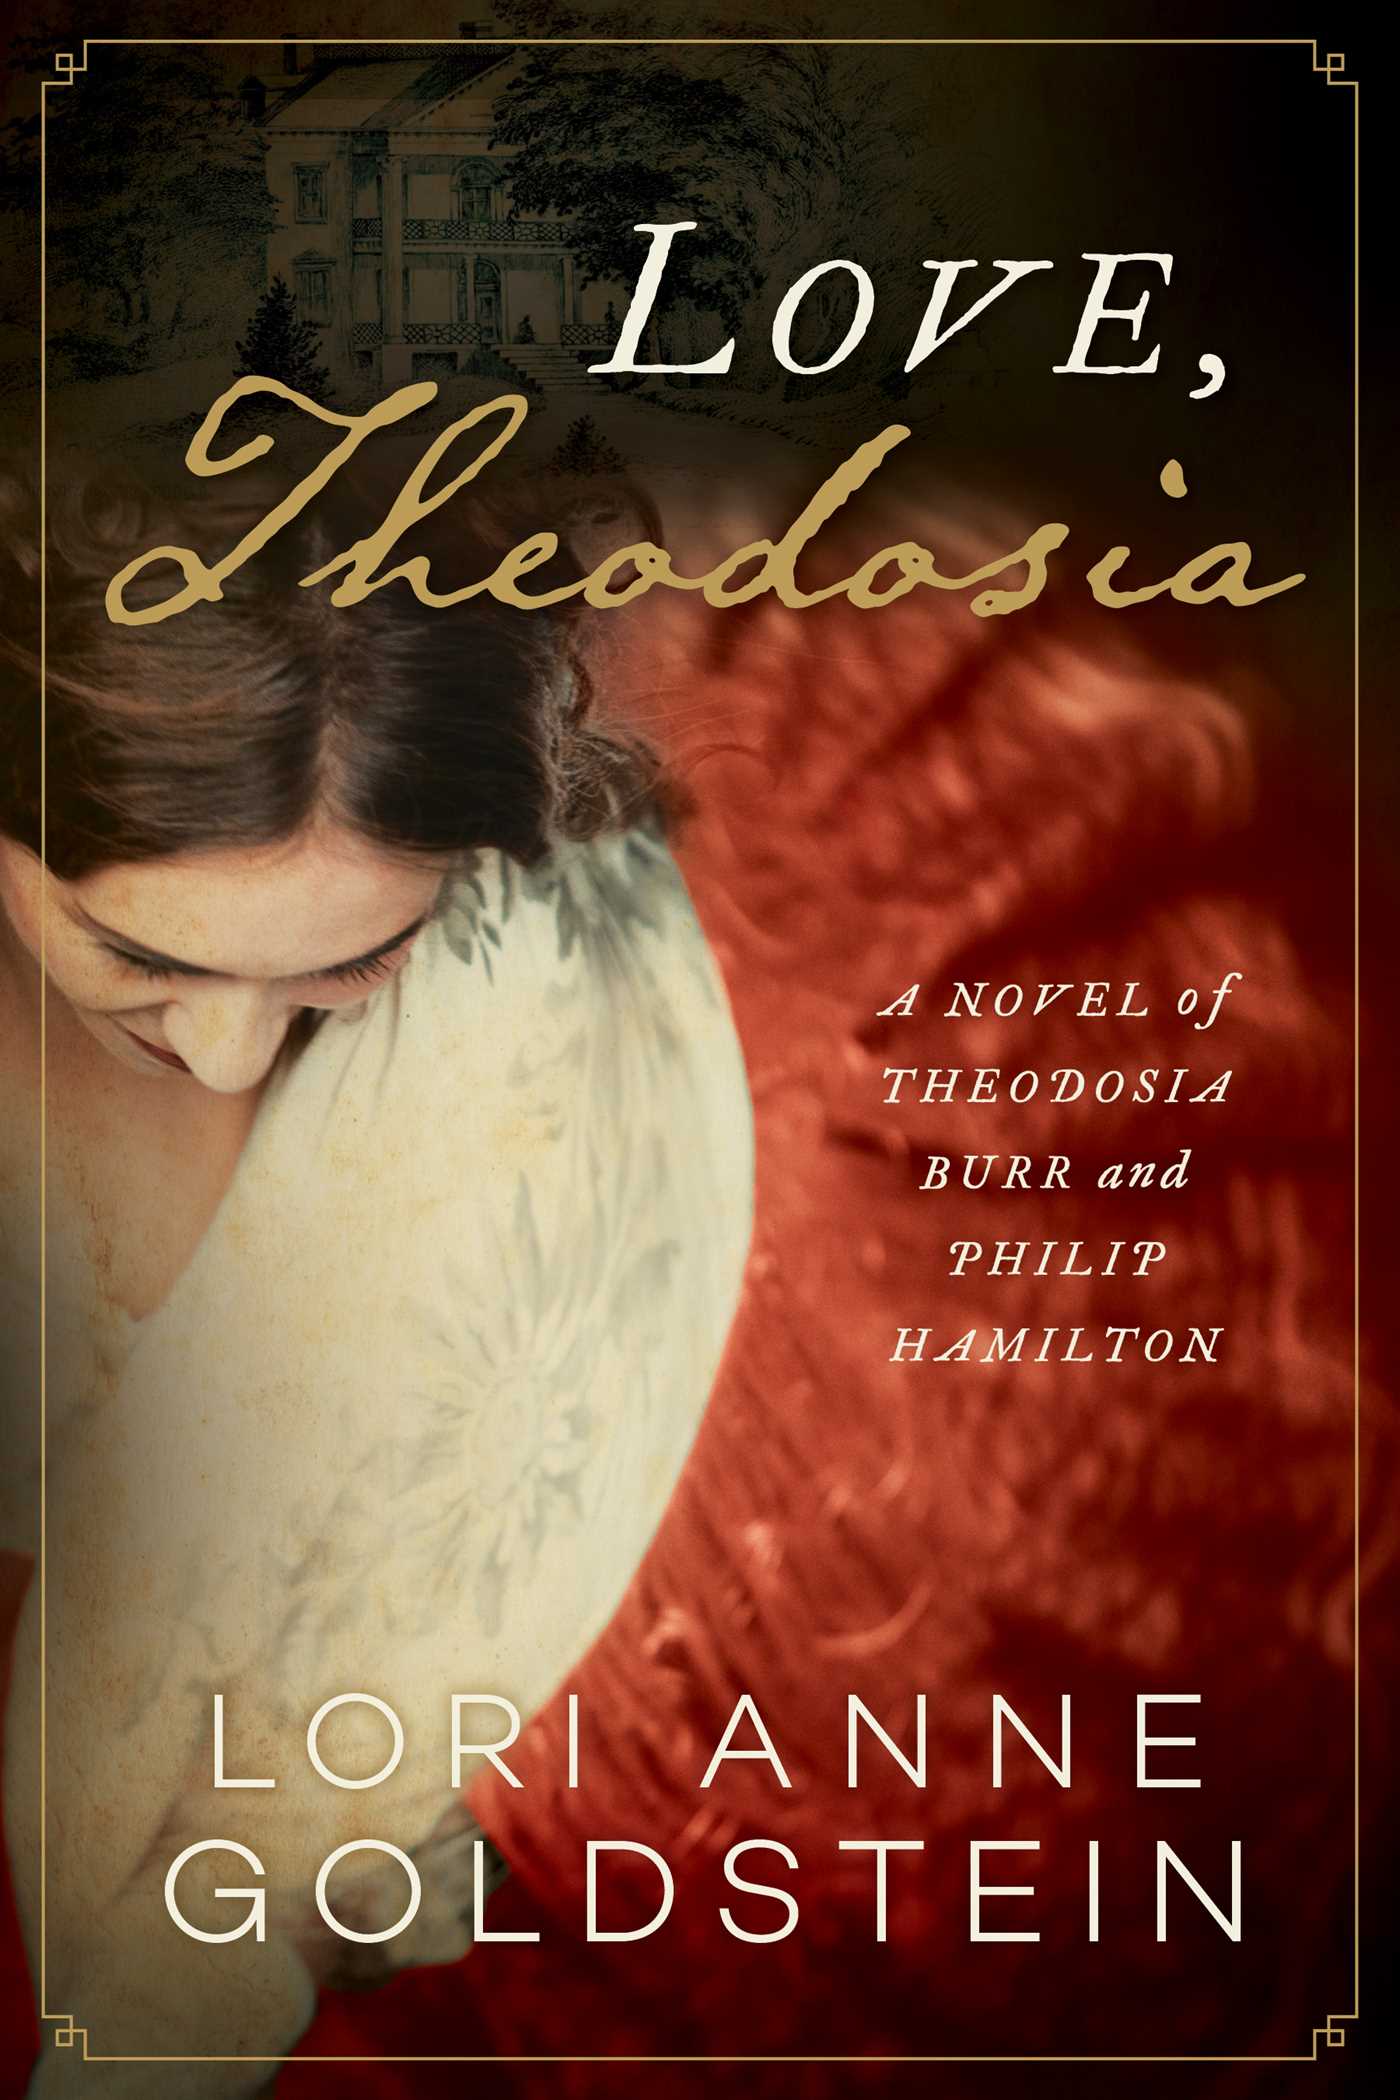 Love, Theodosia by Lori Anne Goldstein